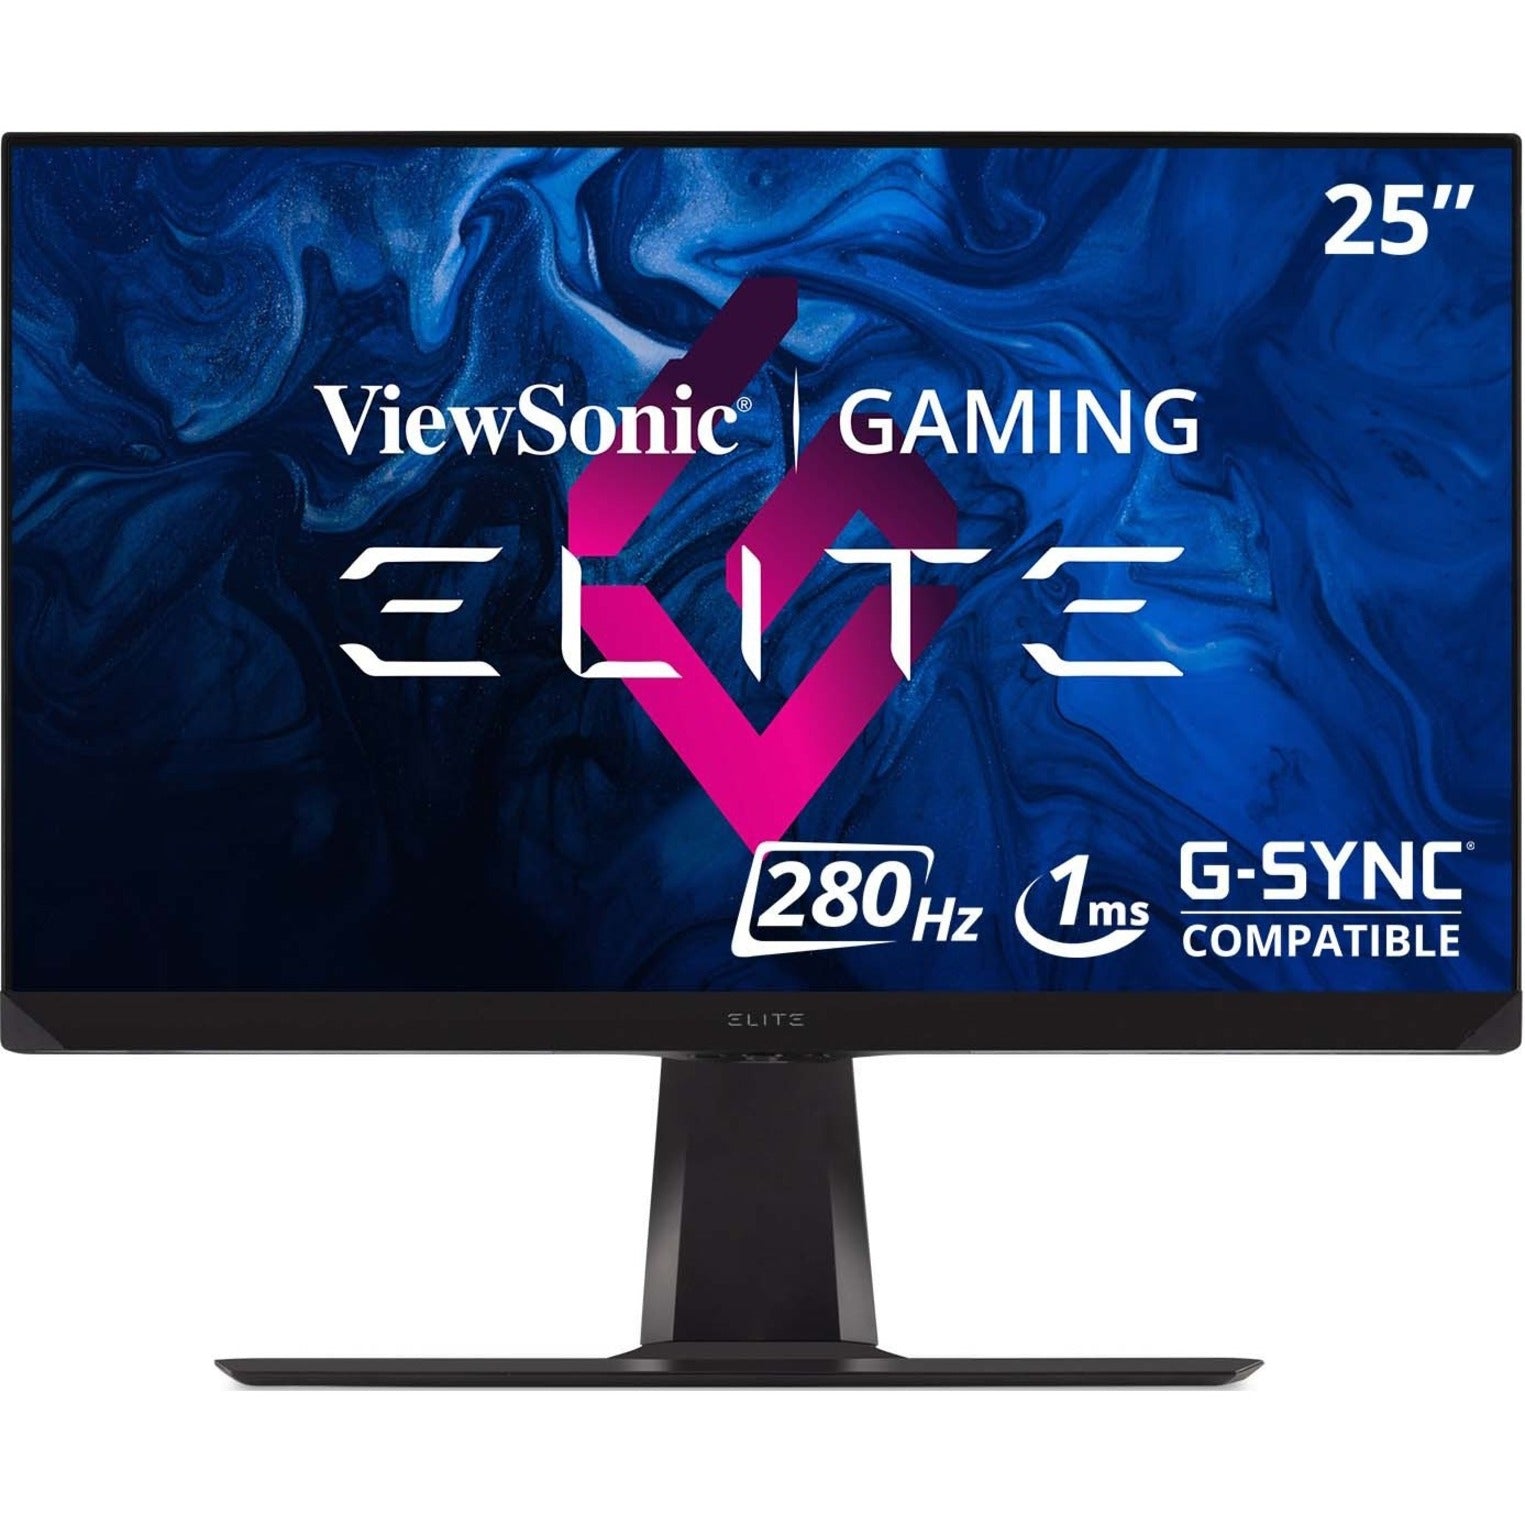 ViewSonic XG250 Elite Gaming Monitor, 25 IPS, 240Hz, 1ms, NVIDIA G-Sync Compatible, Advanced Ergonomics, RGB Lighting